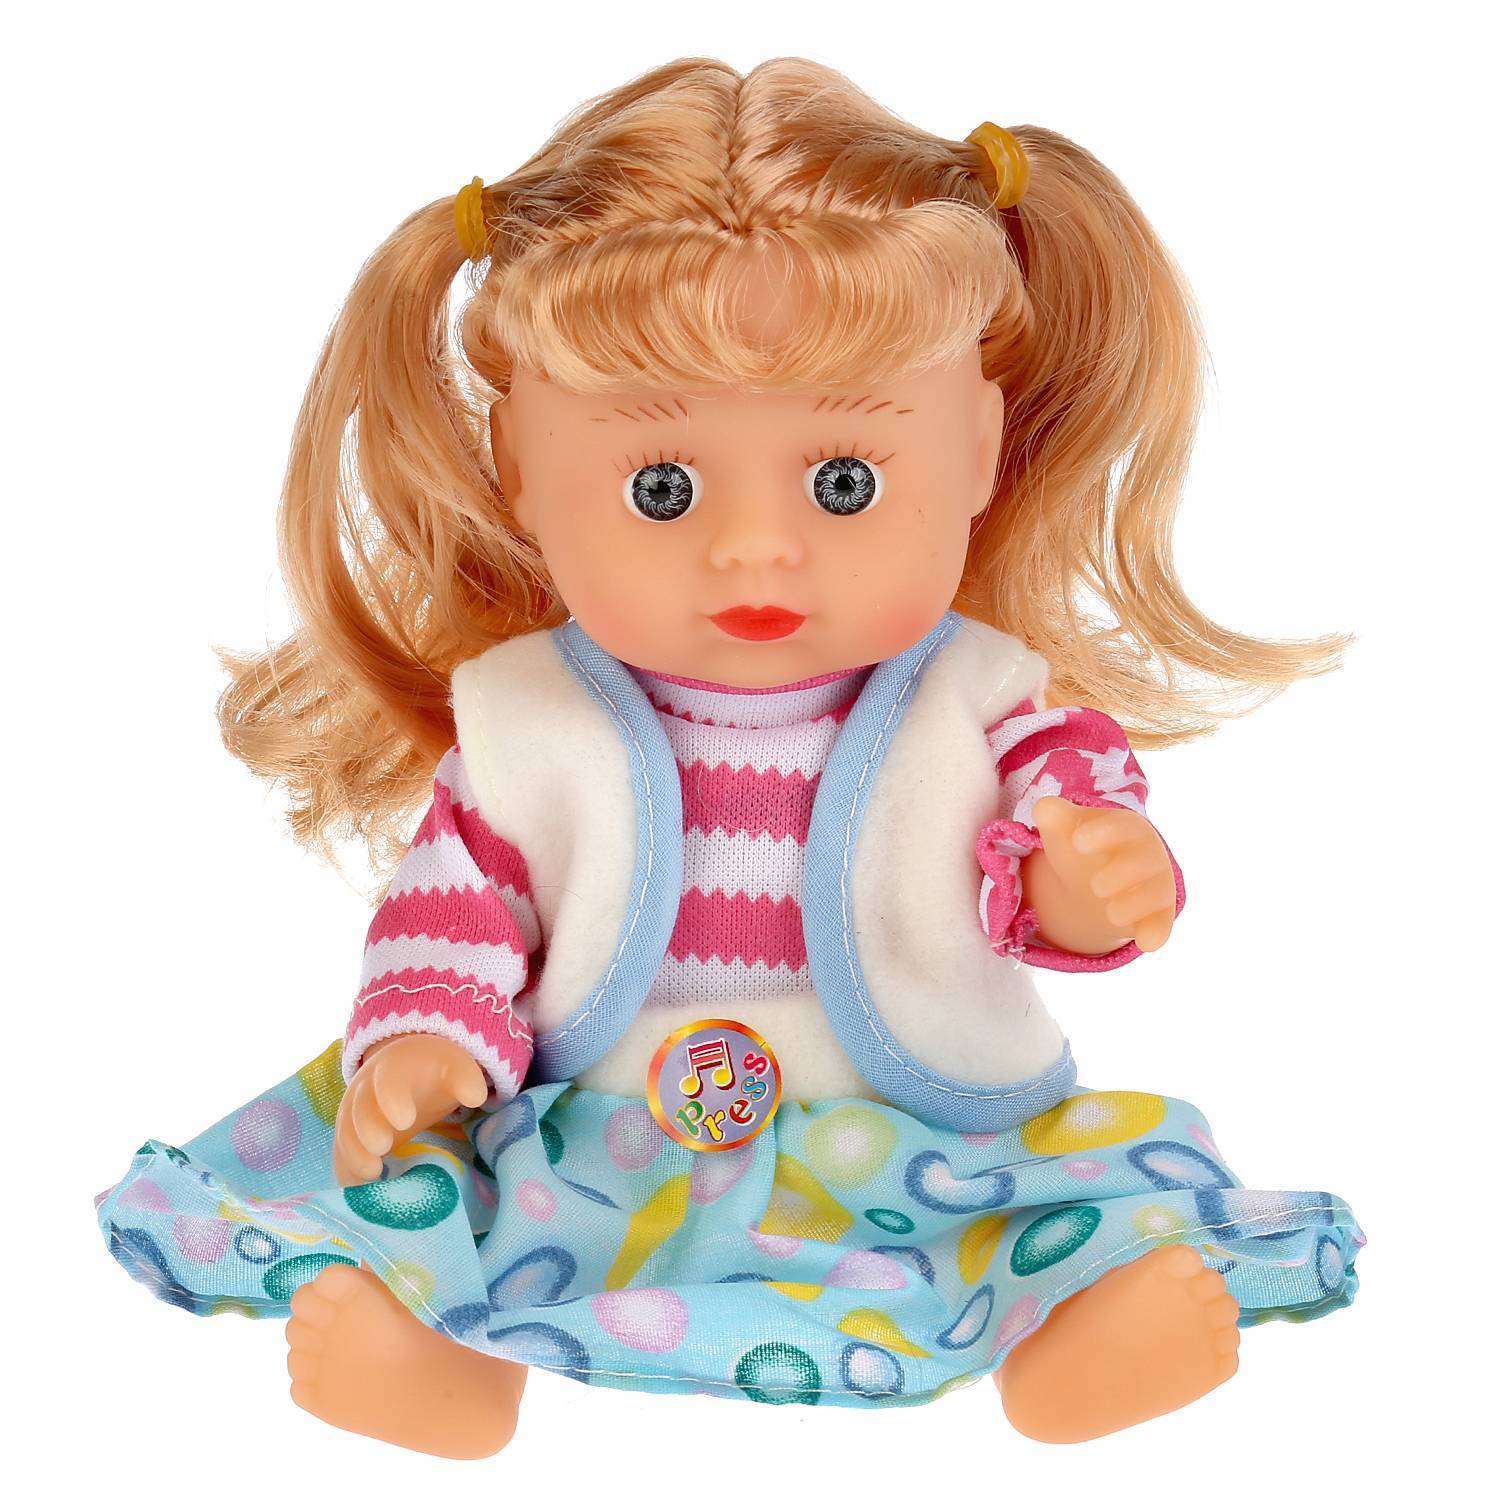 Кукла говорит мама. Tongde кукла. Кукла Tongde Радочка, t572-d5878. Говорящие куклы.